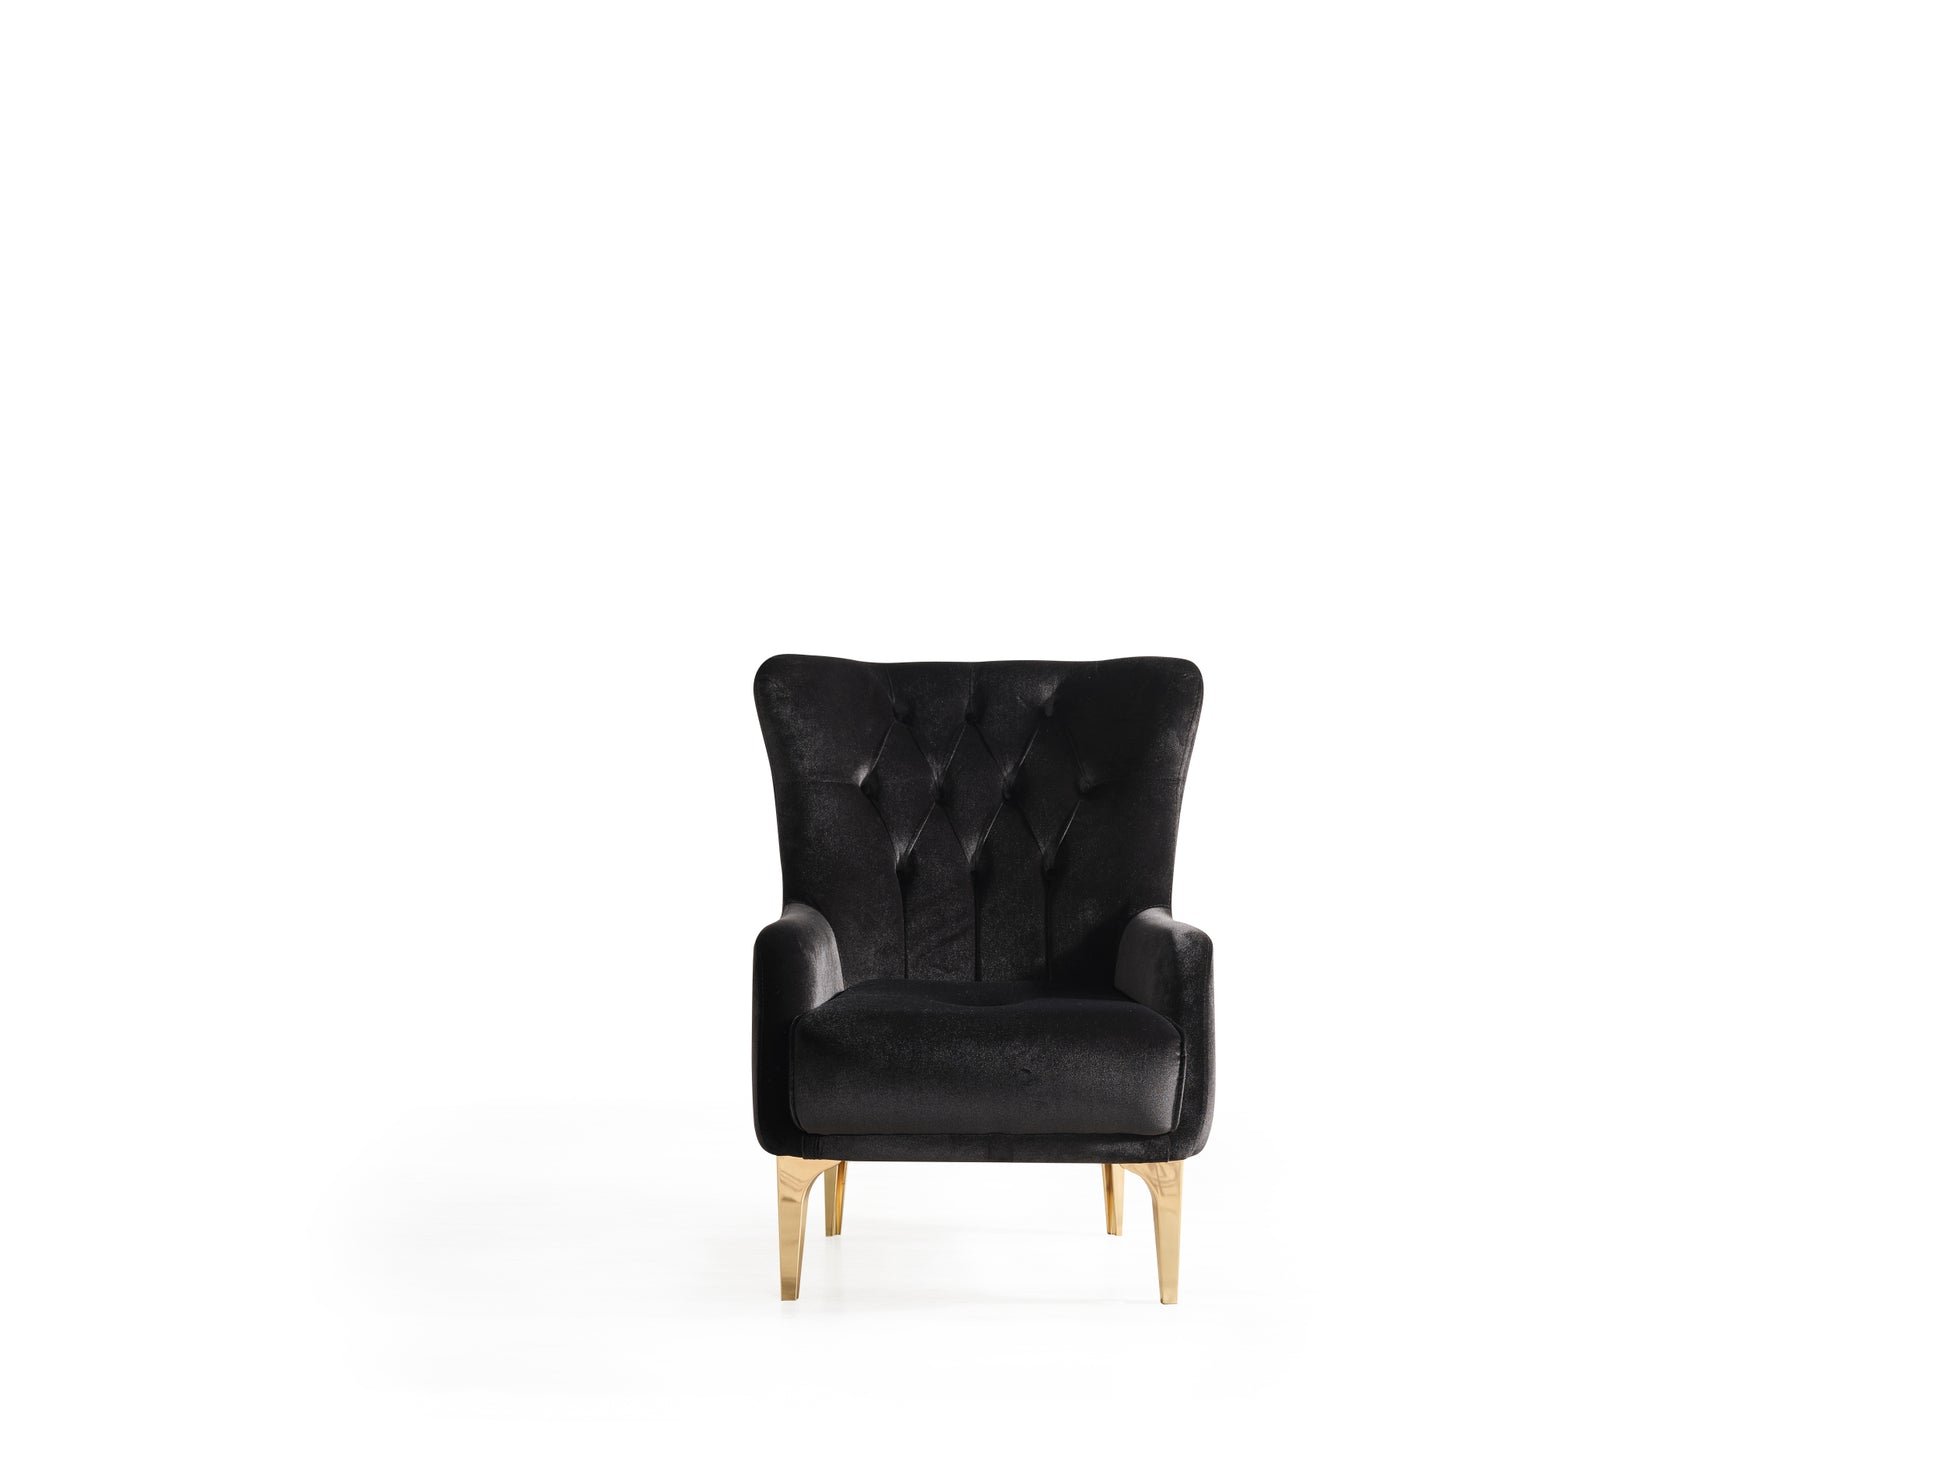 Lust Modern Style Chair in Black black-modern-upholstered-wood